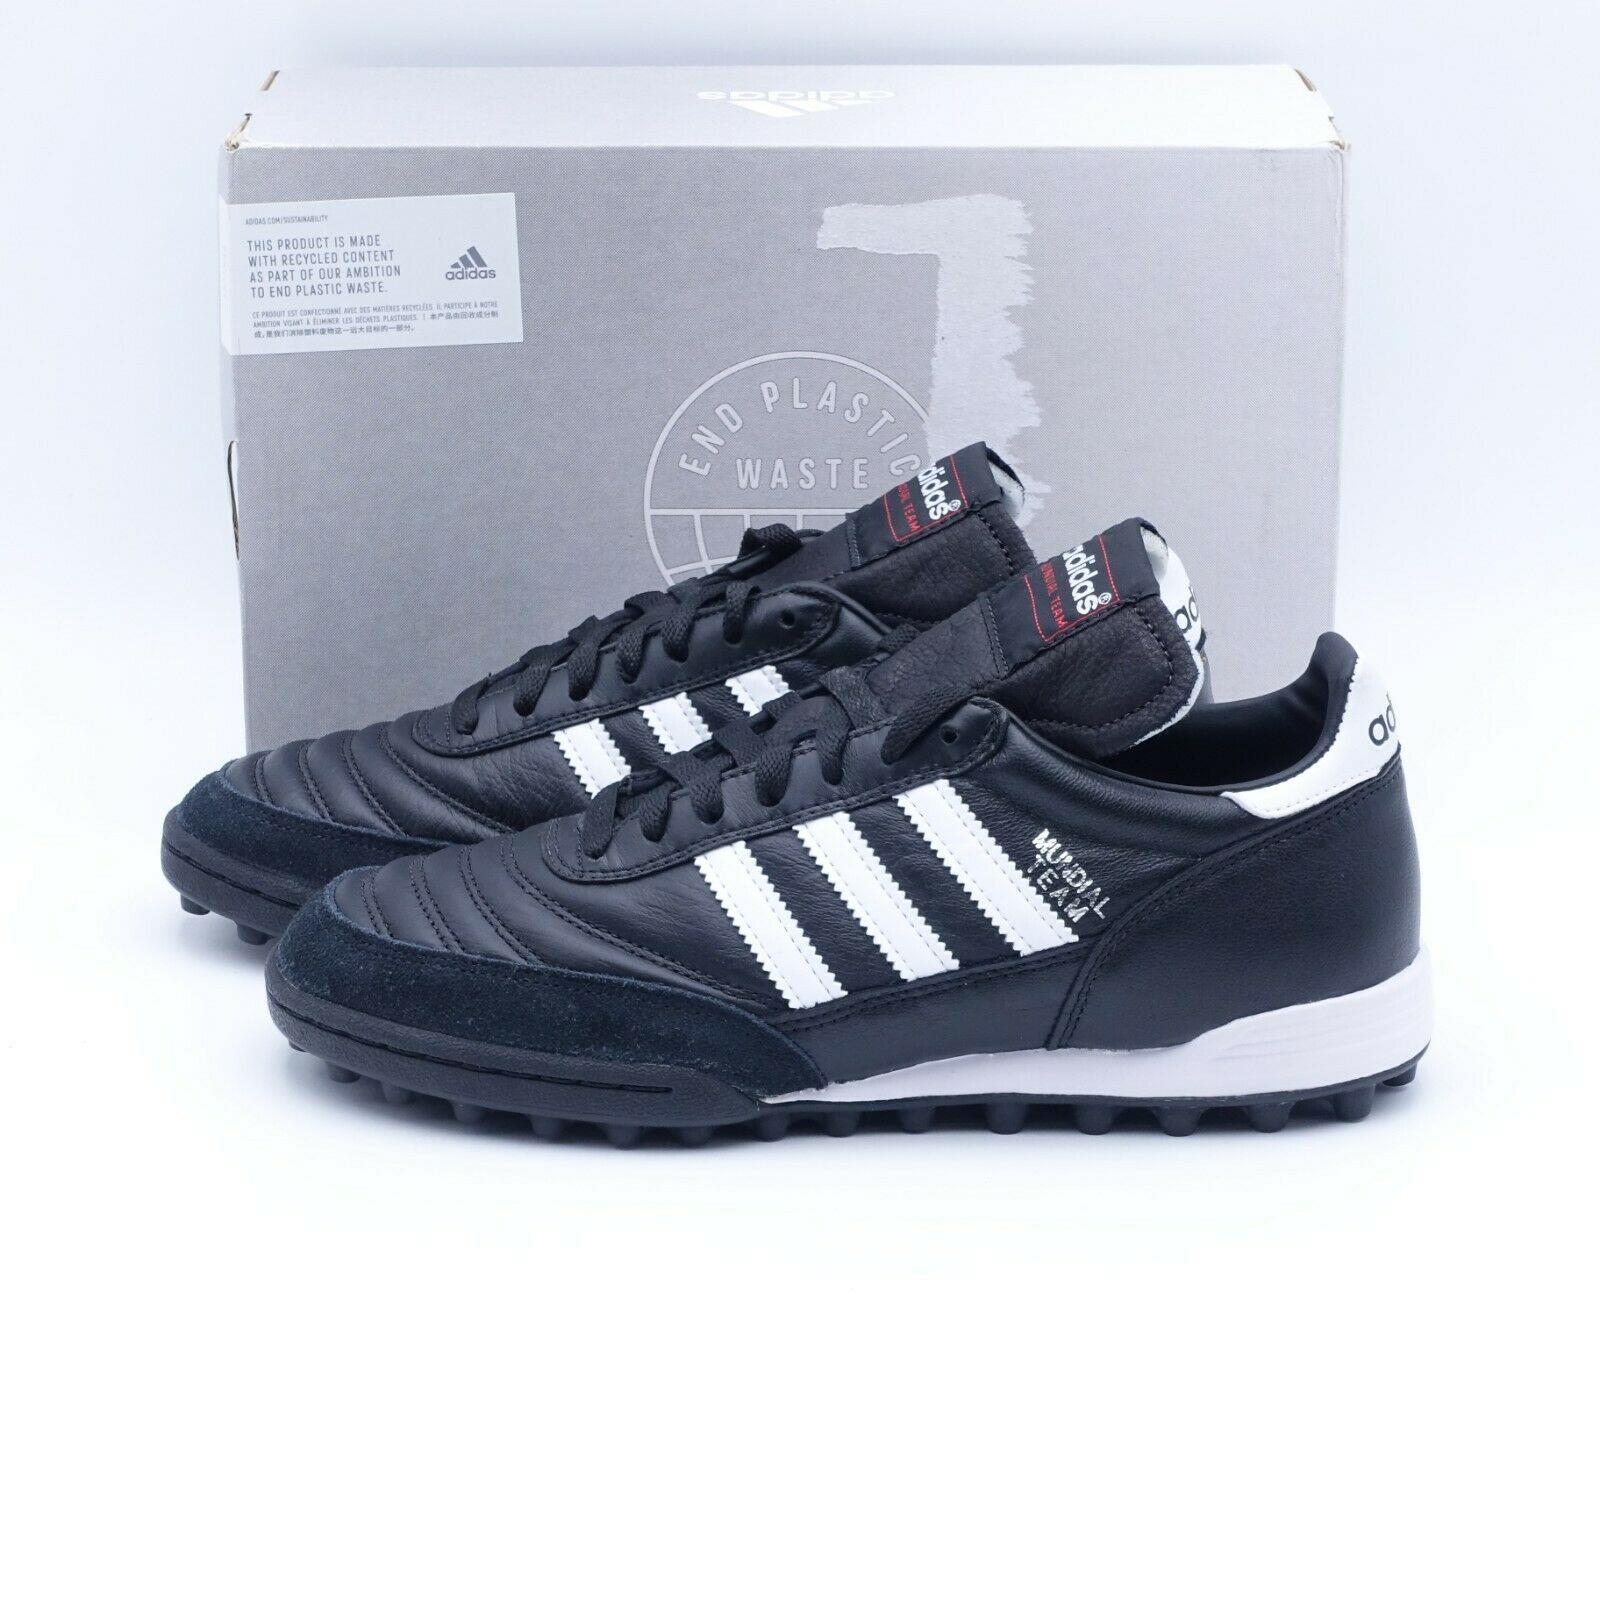 Size 7 Men`s Adidas Mundial Team Soccer Shoes 019228 Black/white